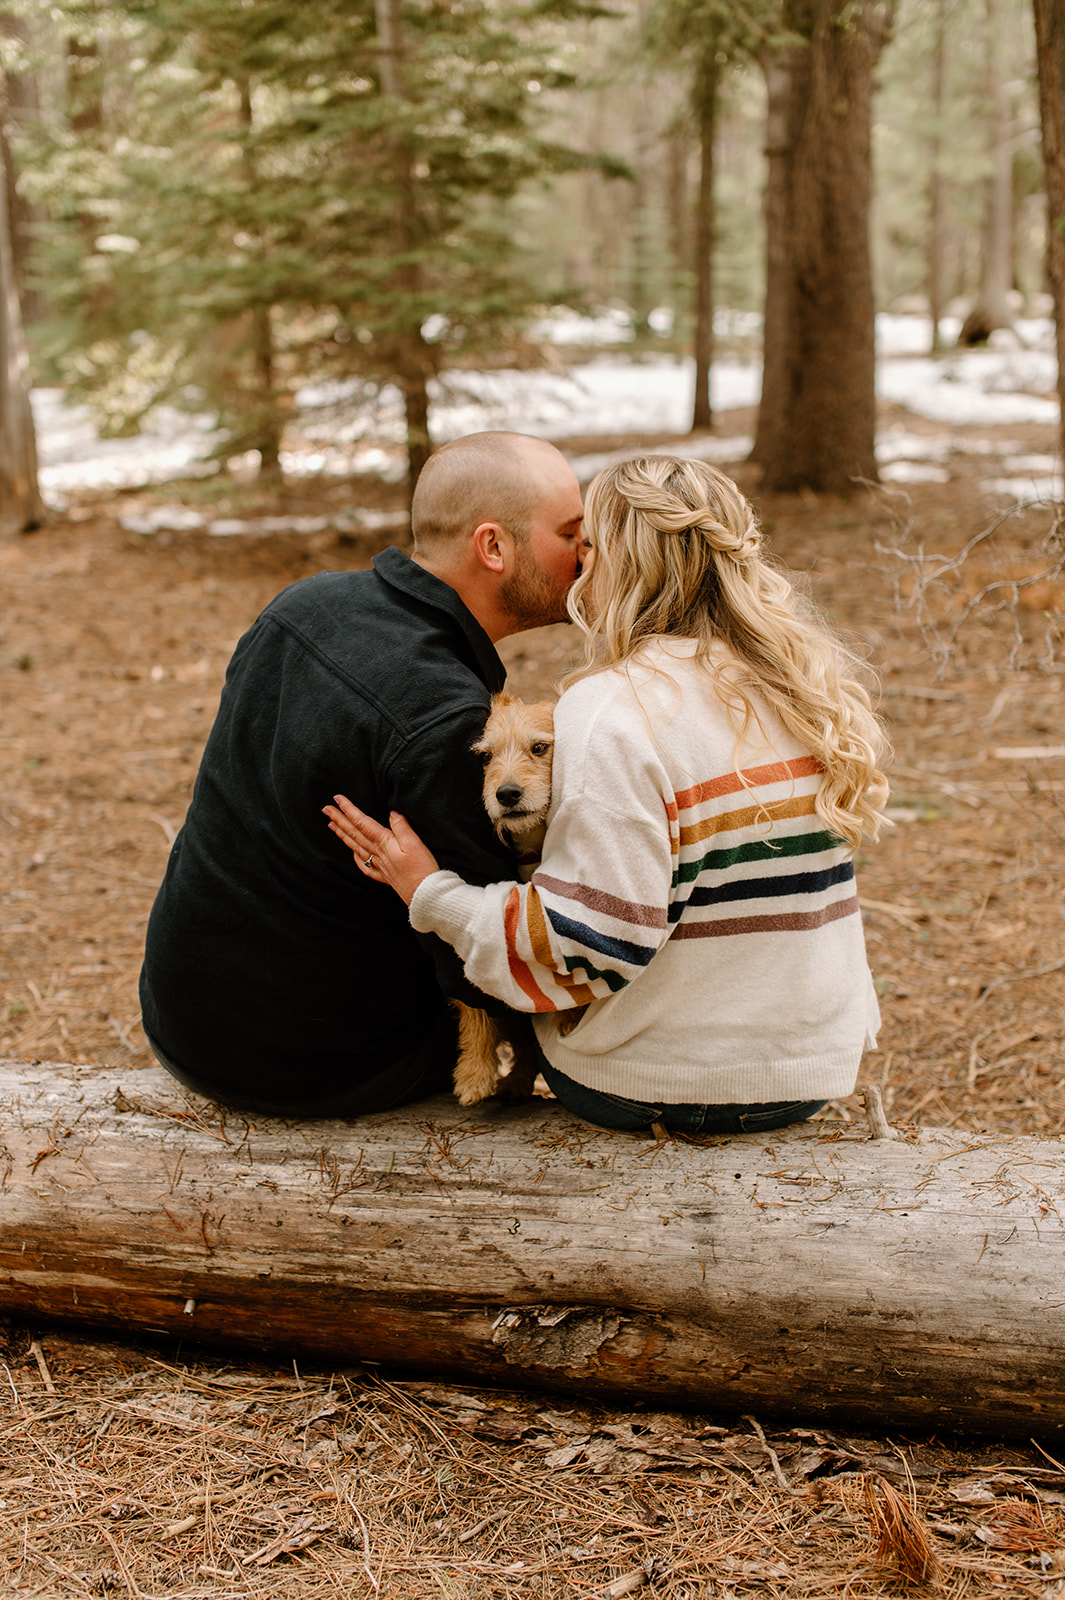 Sydney Jai Photography - Donner Lake engagement photos, engaged couple, forest engagement photos, dogs in engagement photos